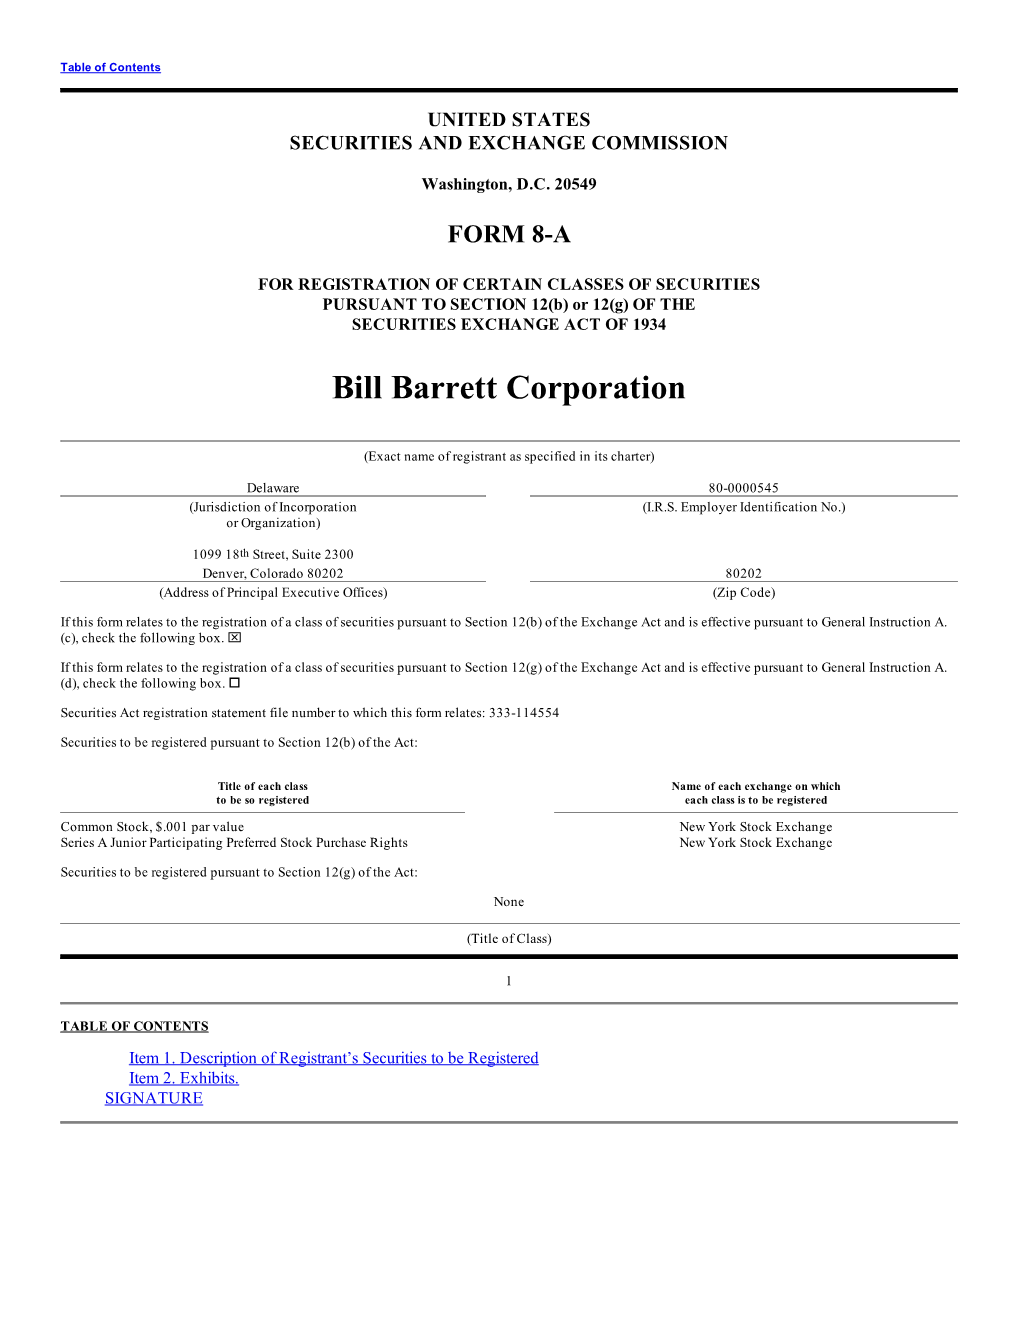 Bill Barrett Corporation